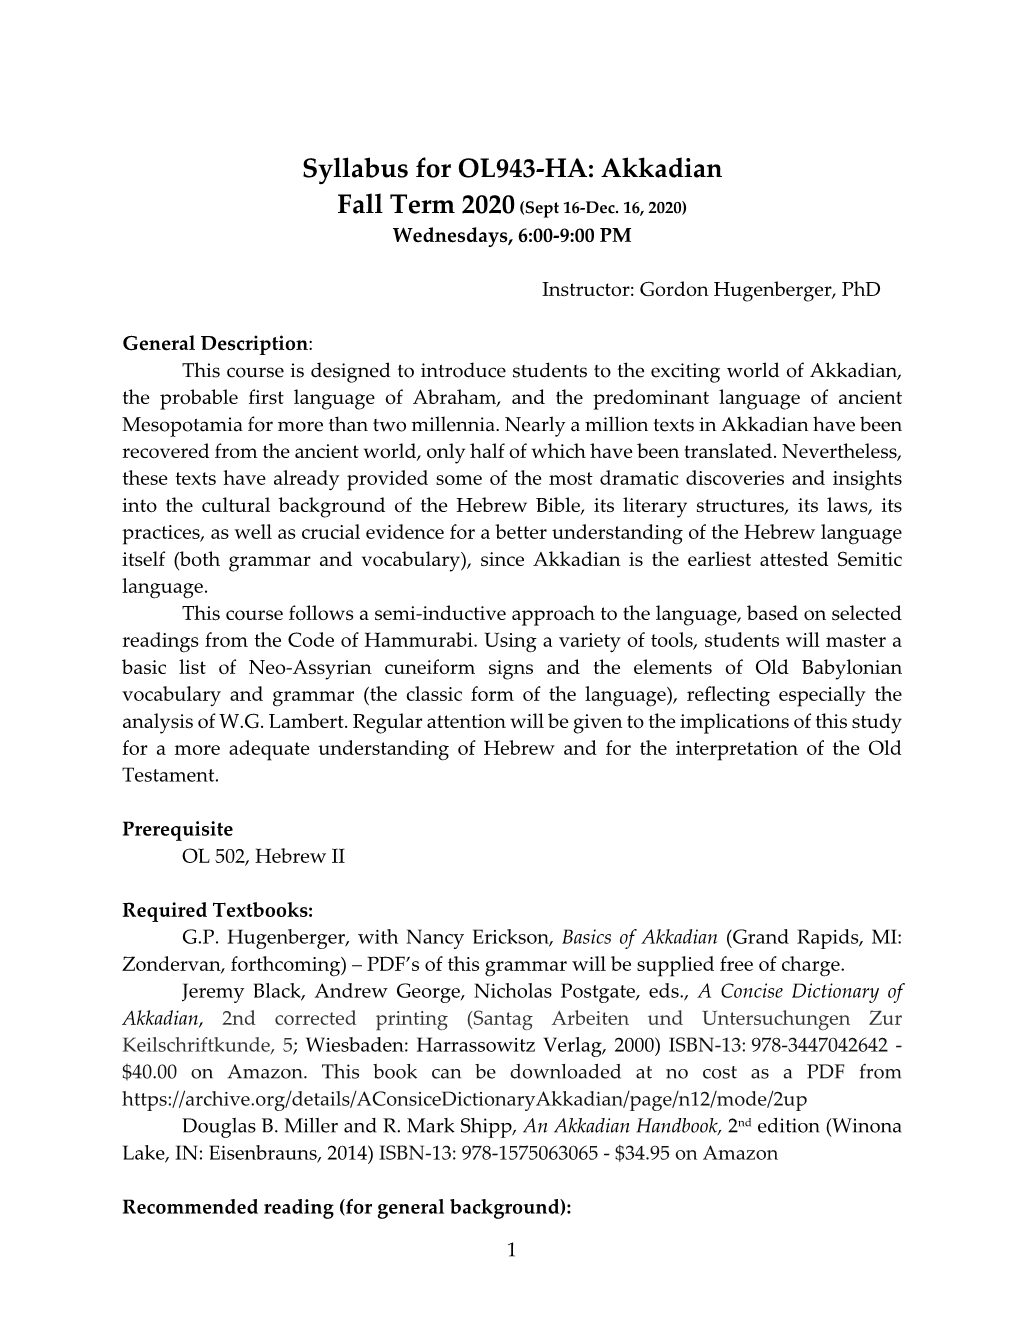 Syllabus for OL943-HA: Akkadian Fall Term 2020(Sept 16-Dec. 16, 2020)